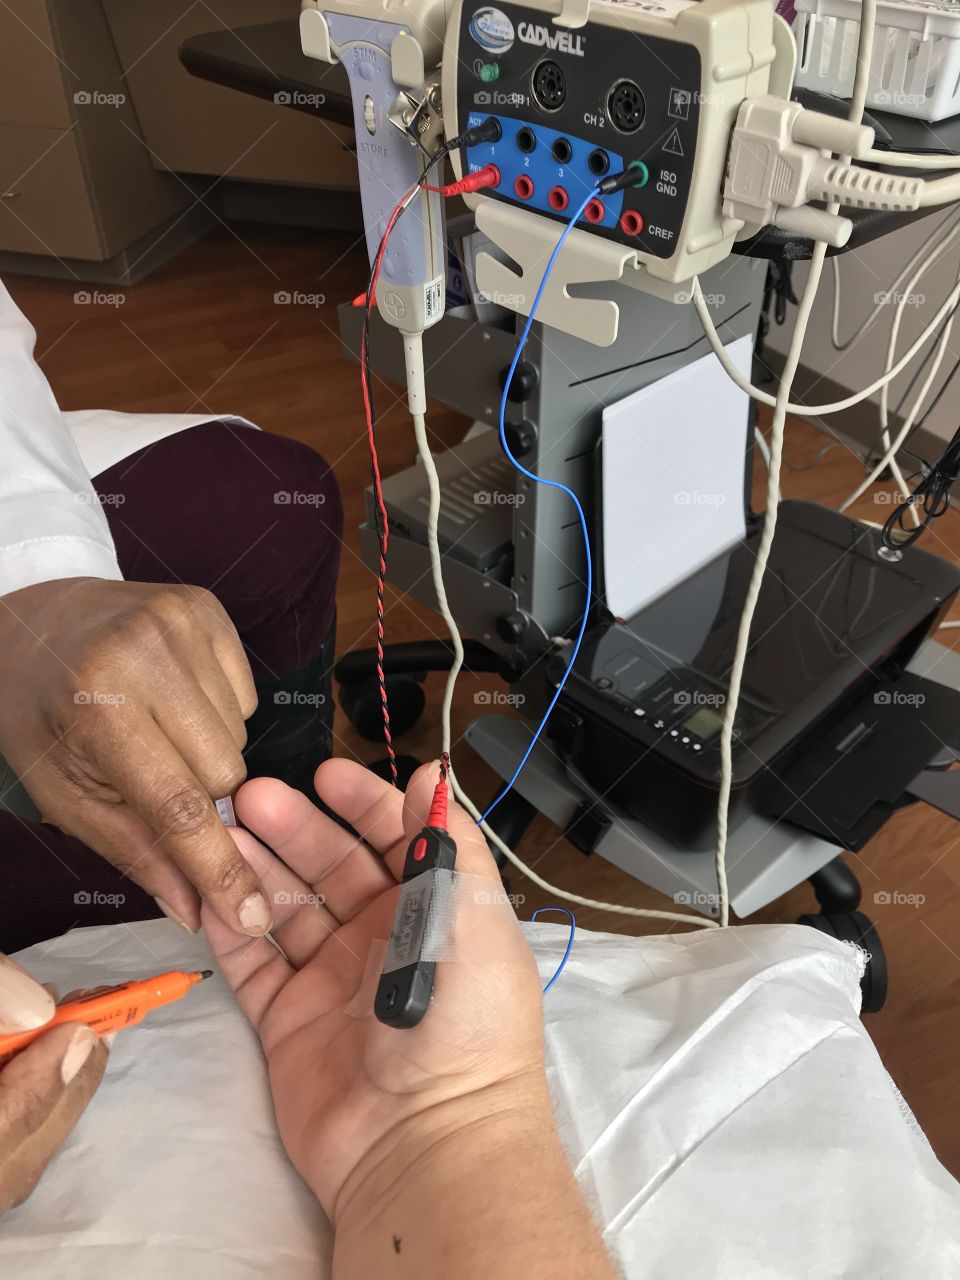 EMG Nerve testing